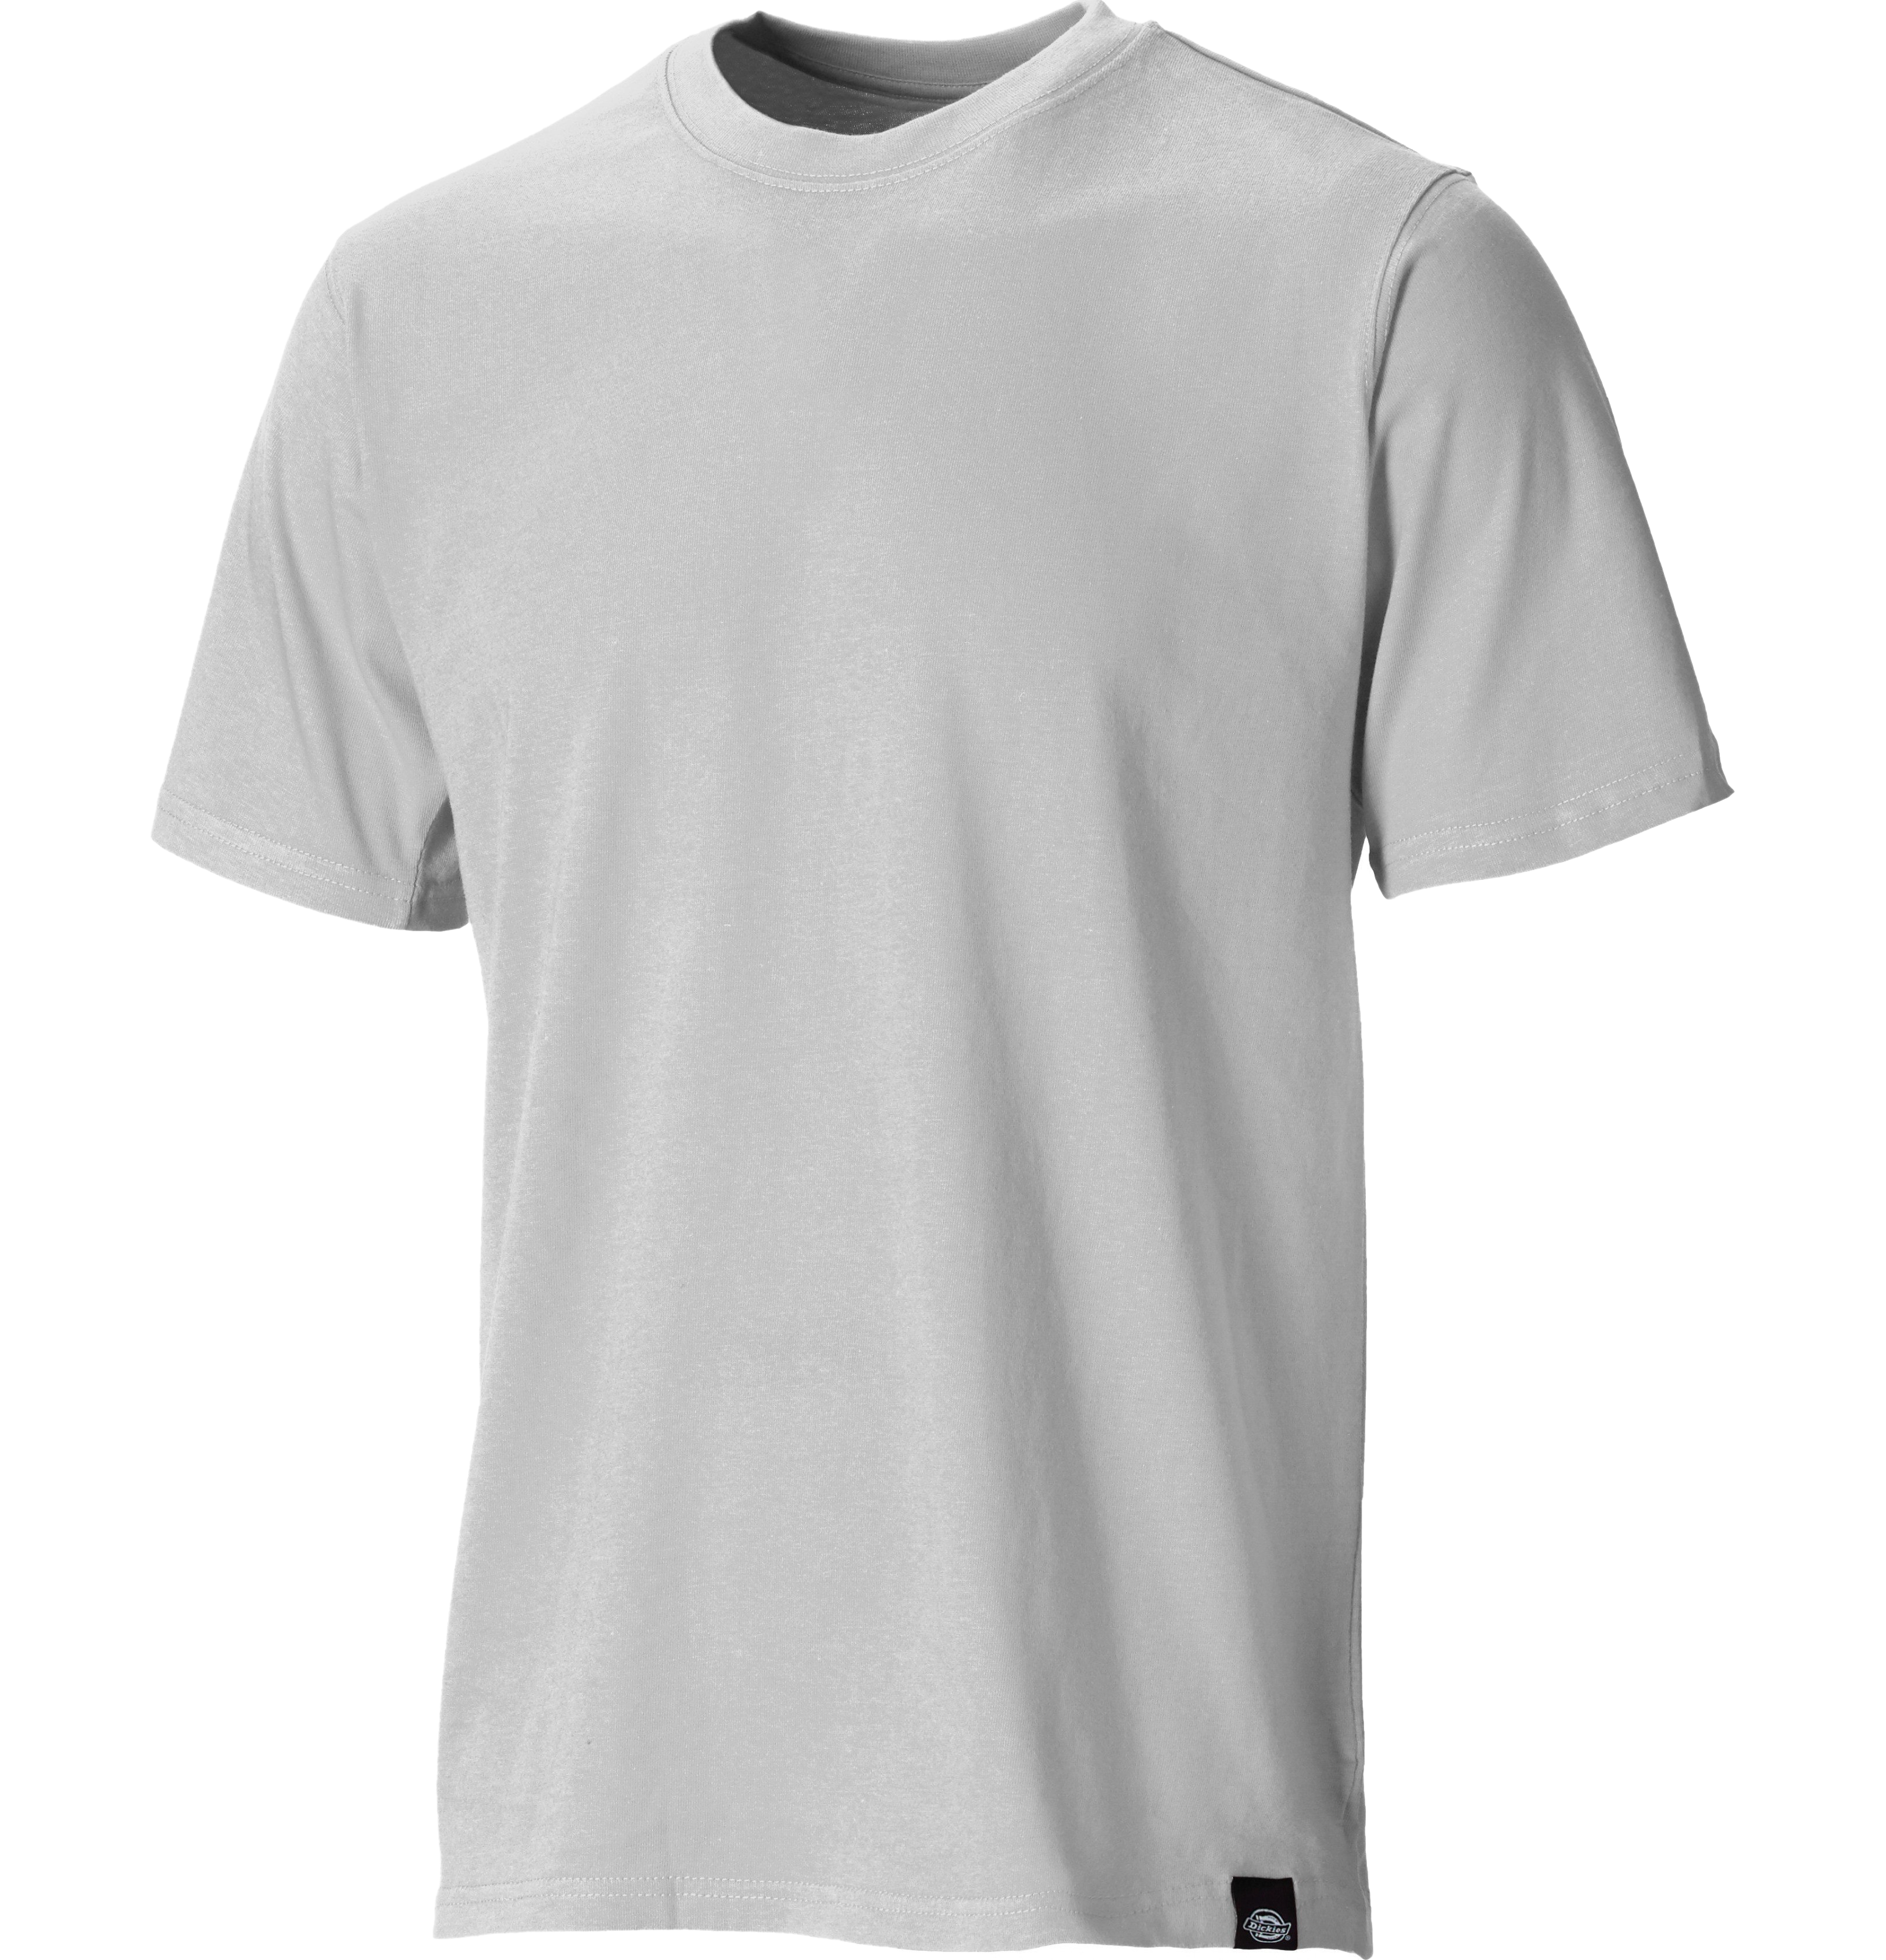 Plain Grey T-Shirt PNG Picture